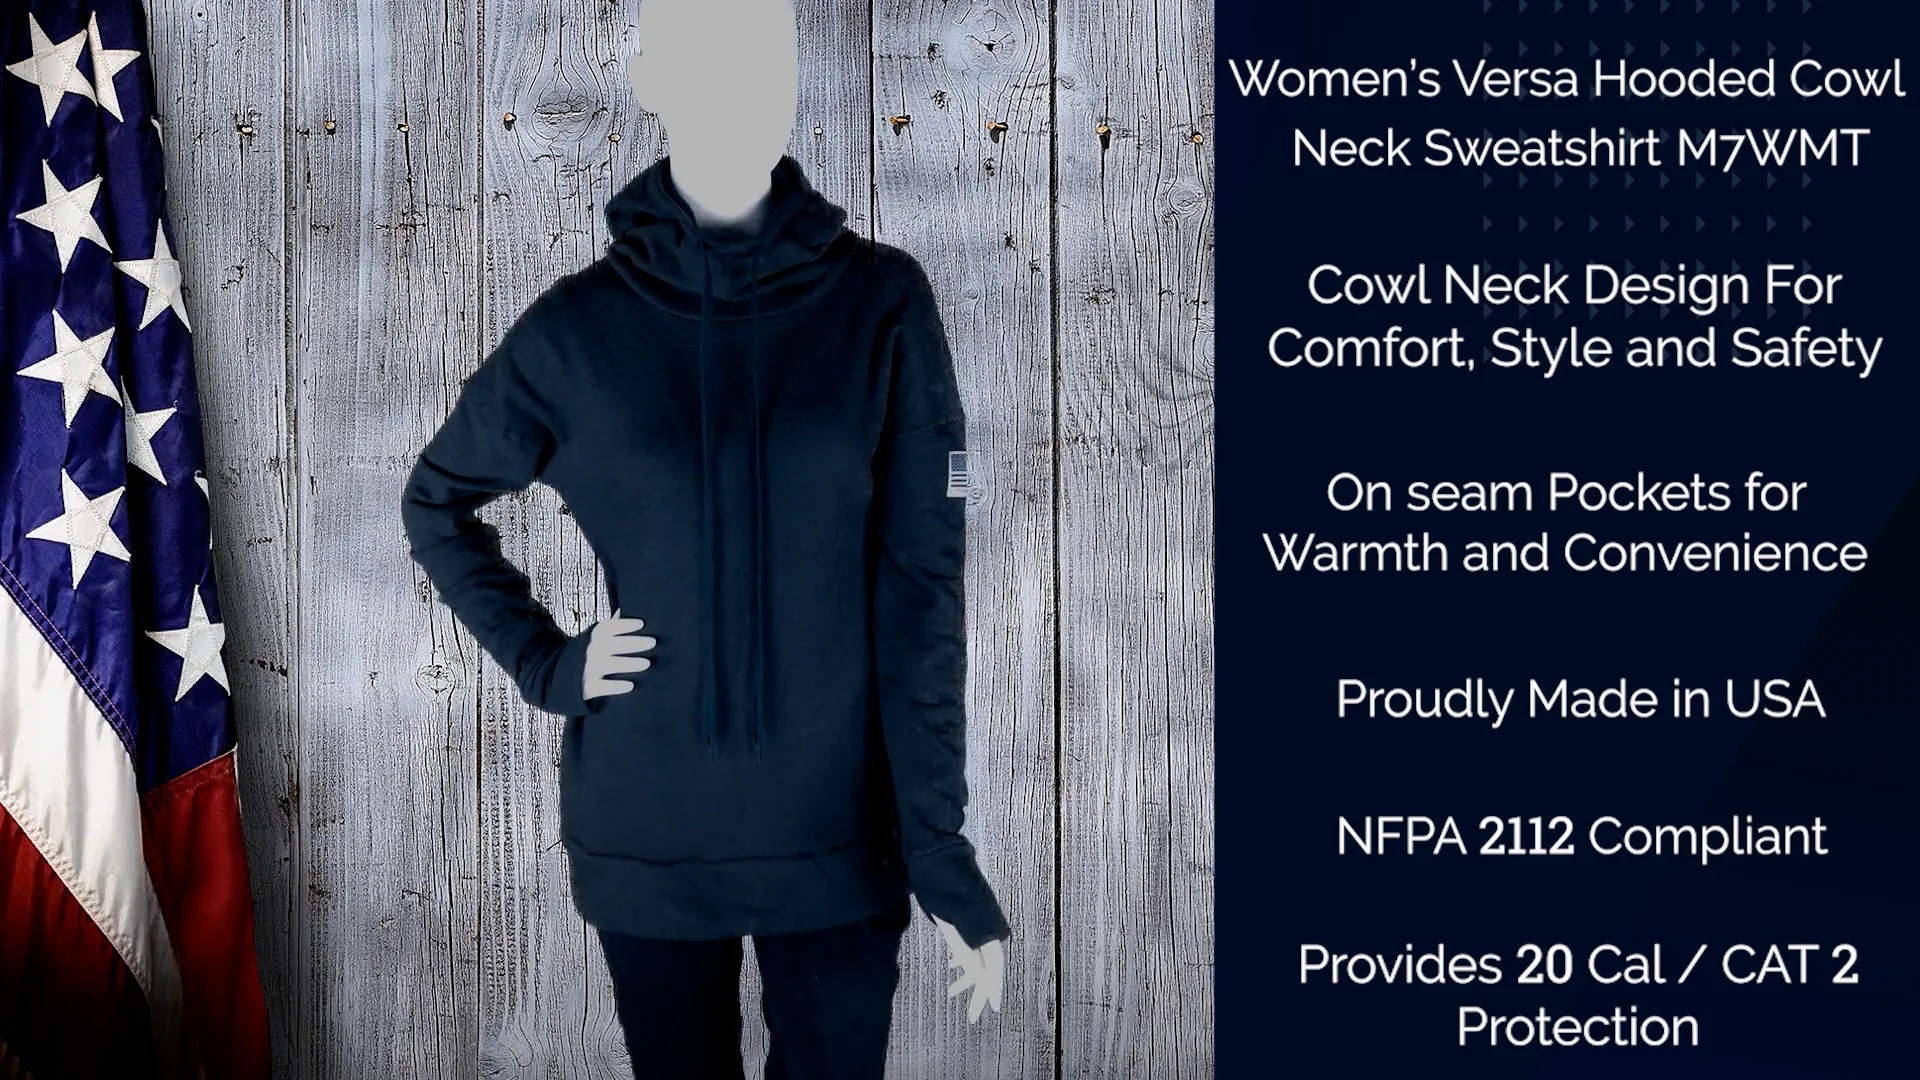 Women's Versa Hooded Cowl Neck Sweatshirt (M7WMT) on Vimeo